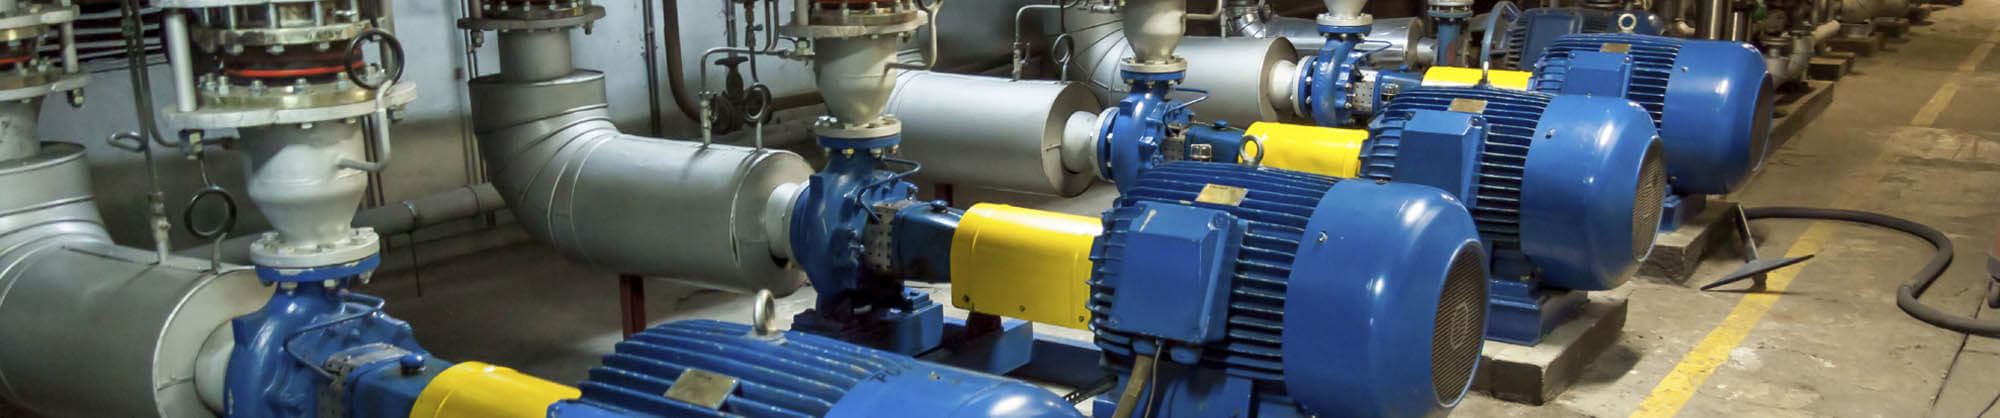 Industrial Pump Service, Repair & Distribution